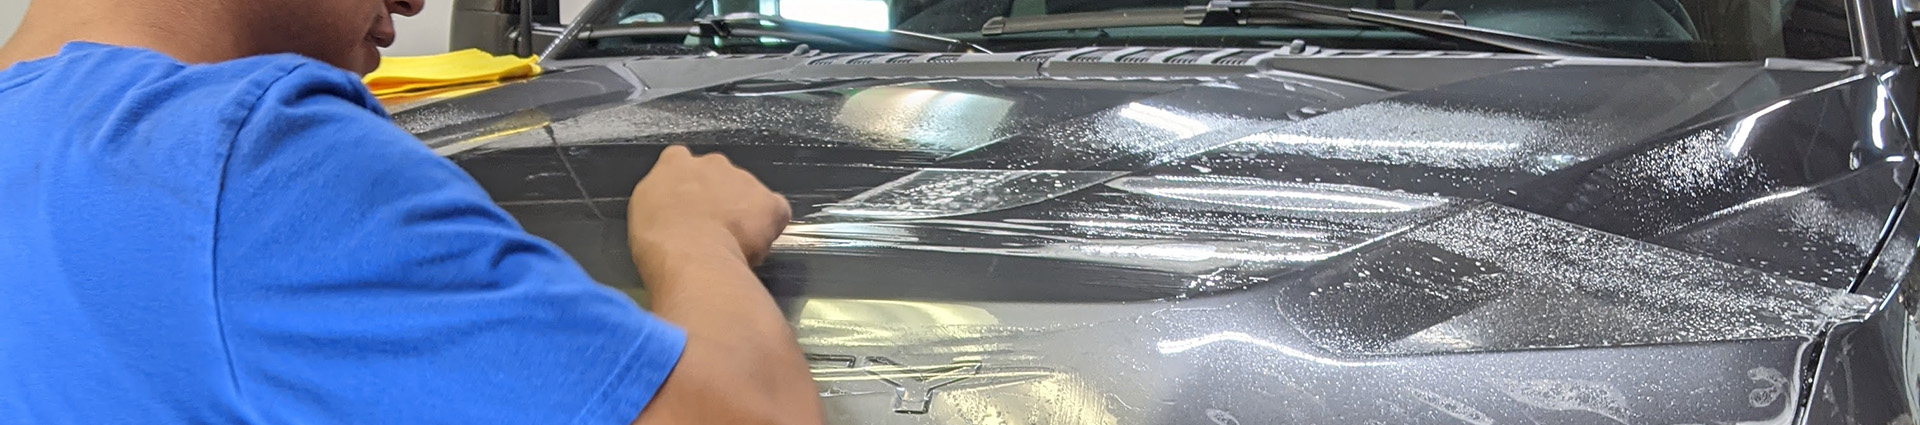 denver technician installing a paint protection film